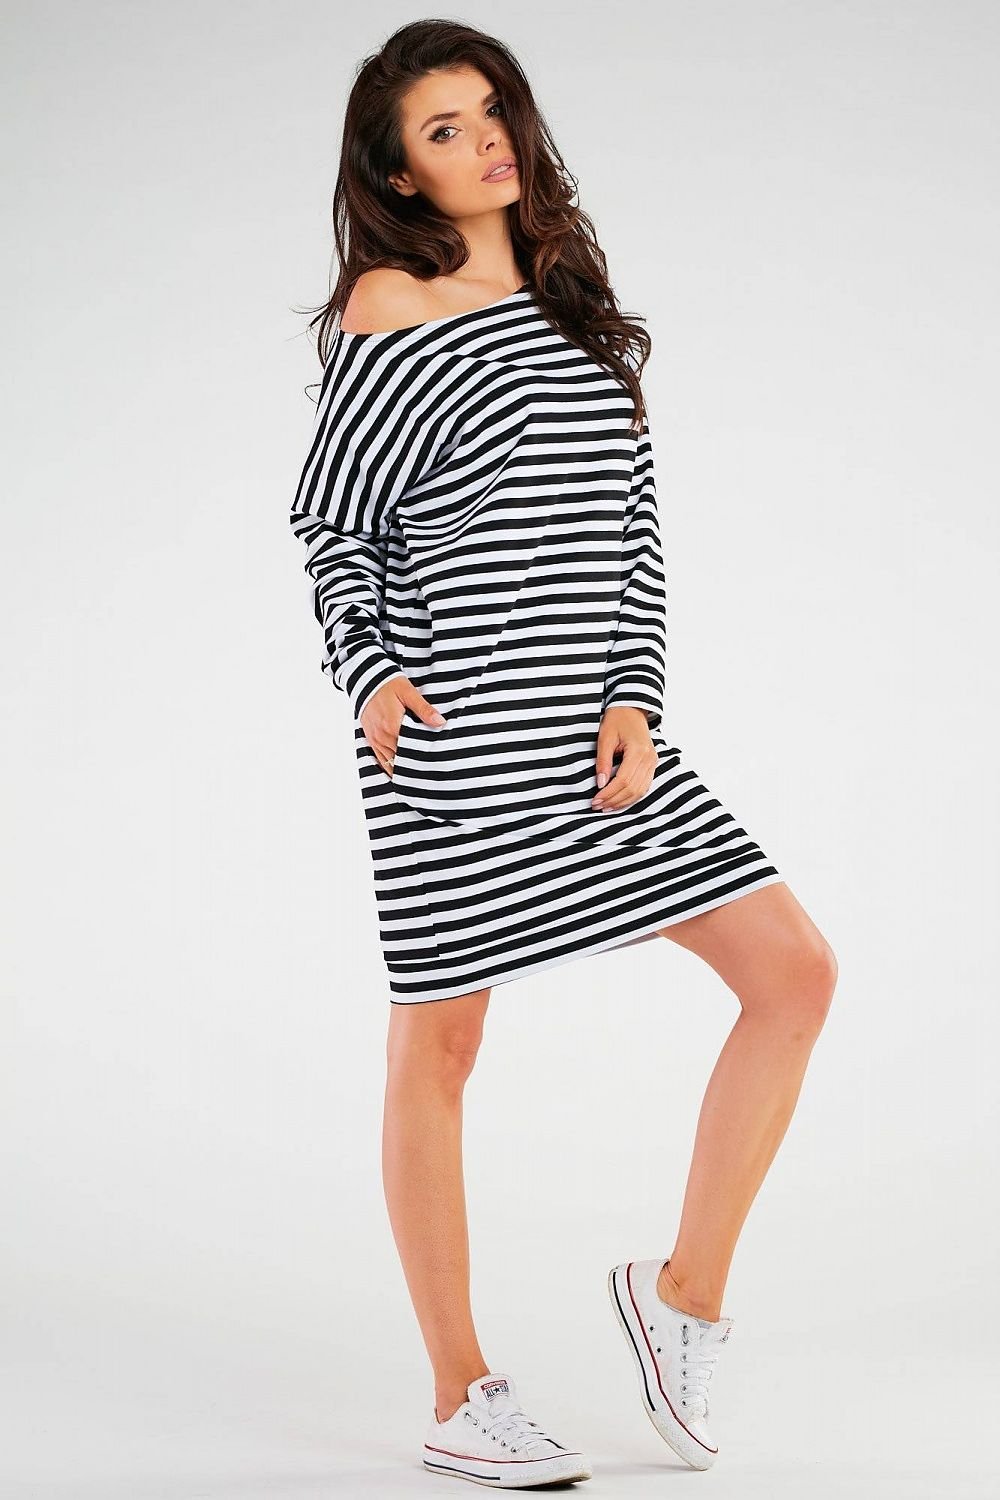 TEEK - Black White Striped One-Shoulder Daydress DRESS TEEK MH   